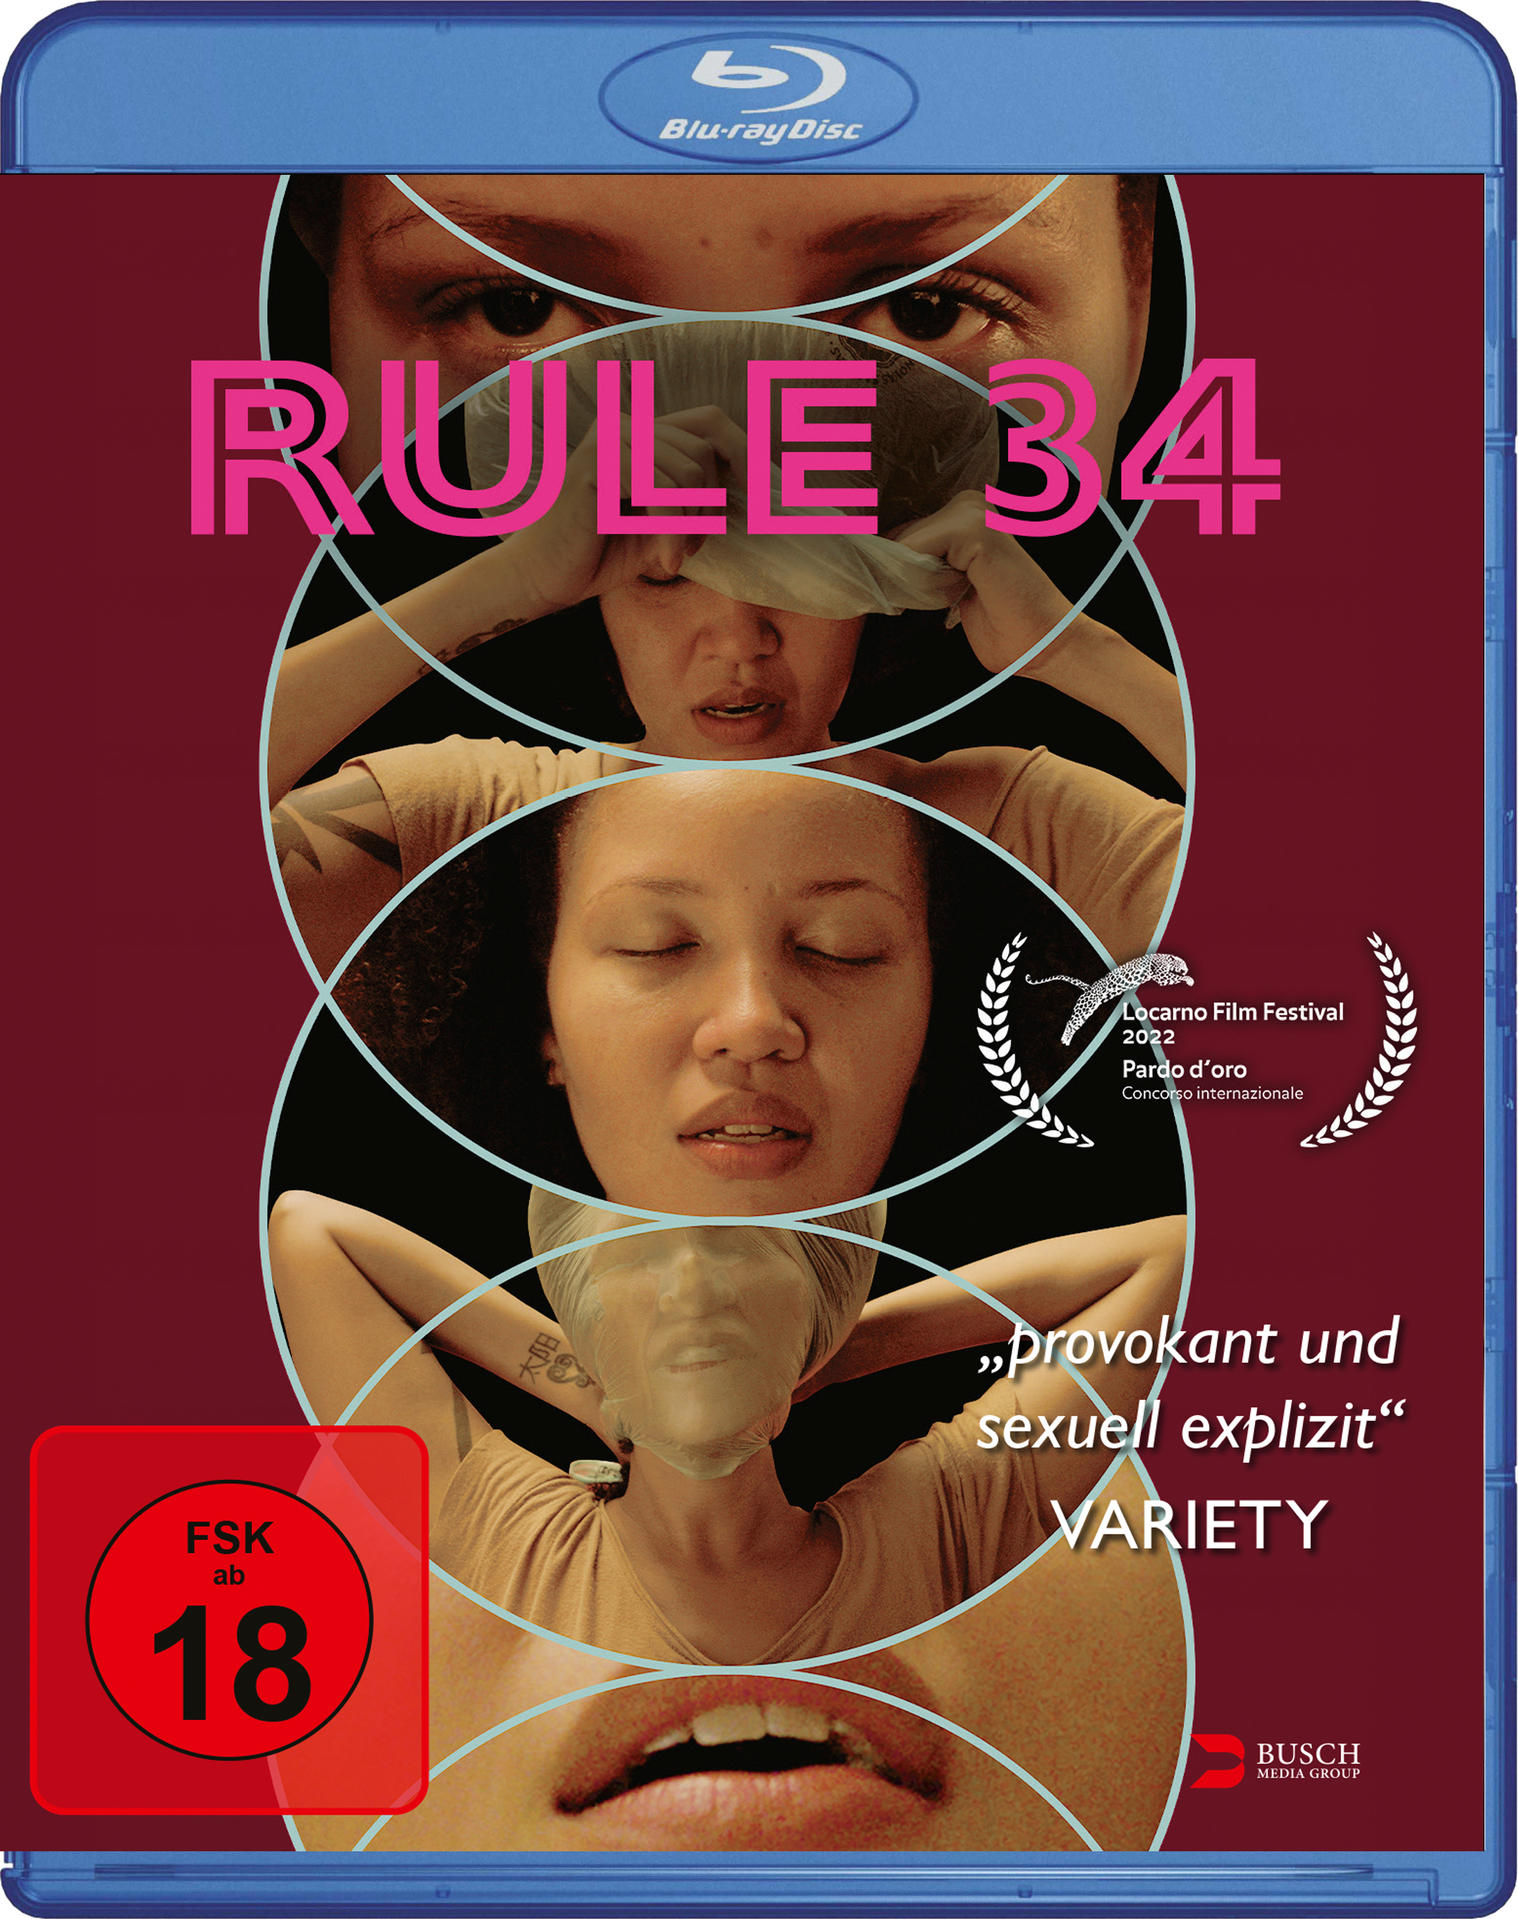 34 Blu-ray Rule